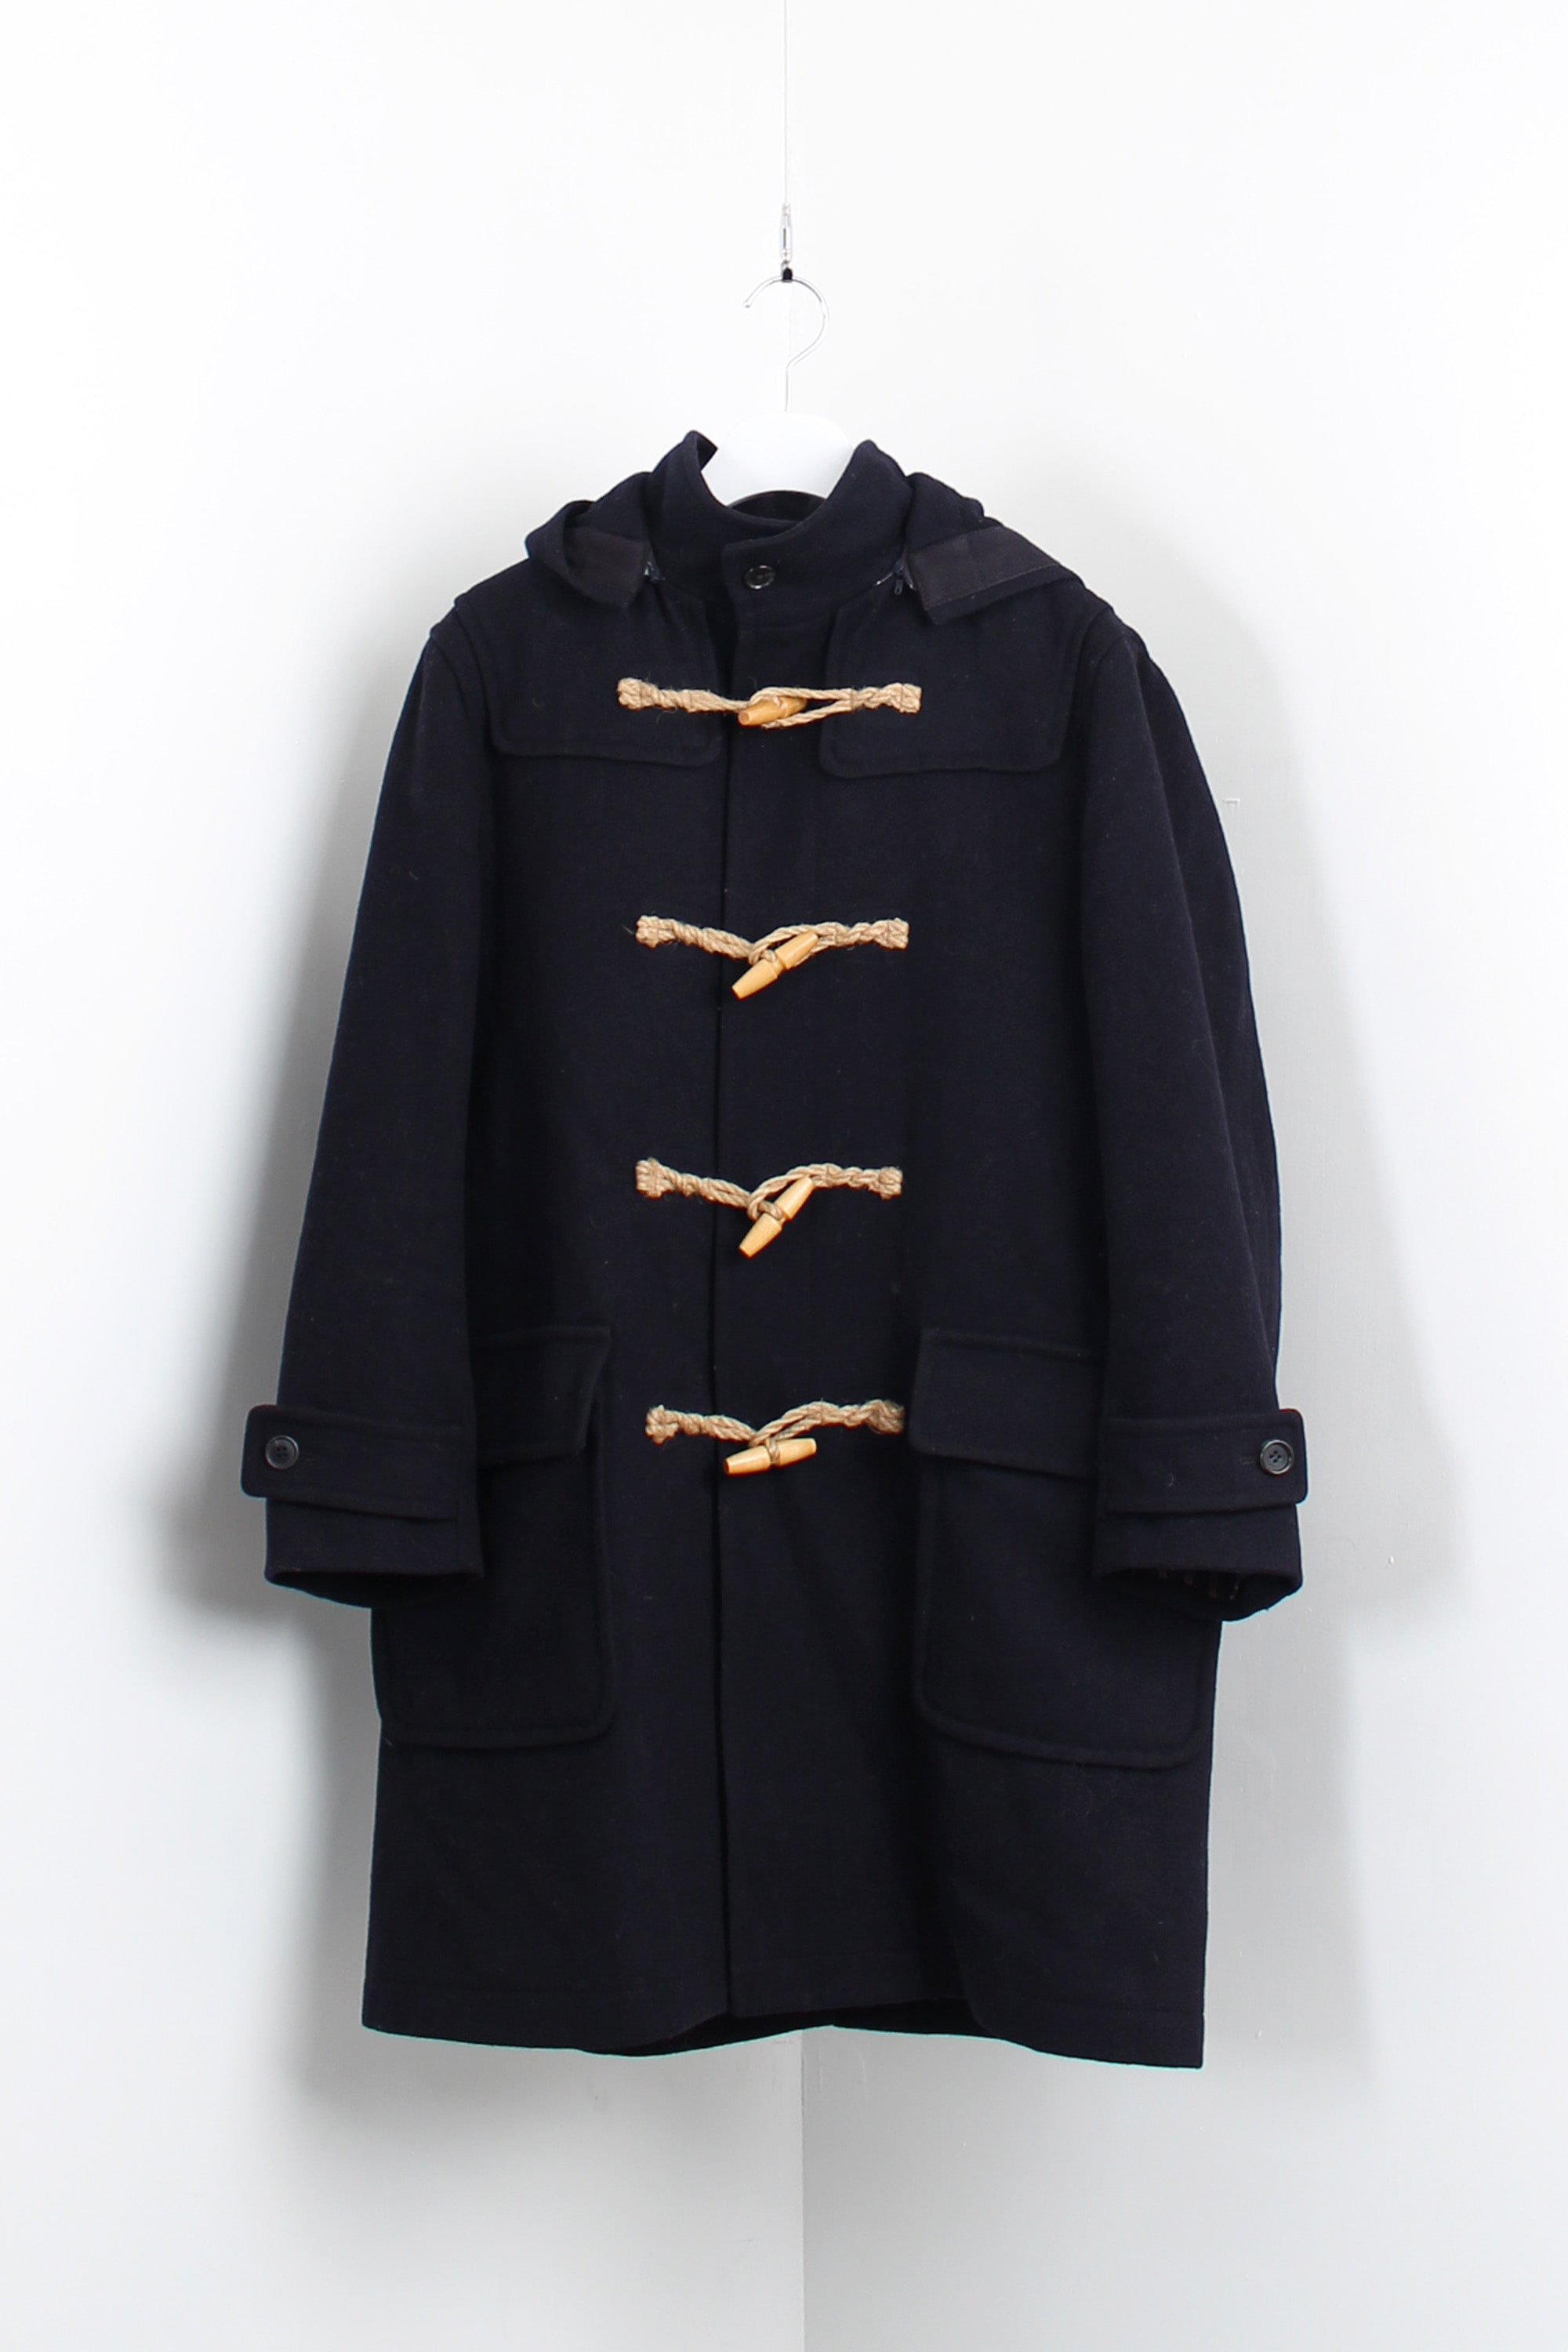 THE SUIT COMPANY duffle coat